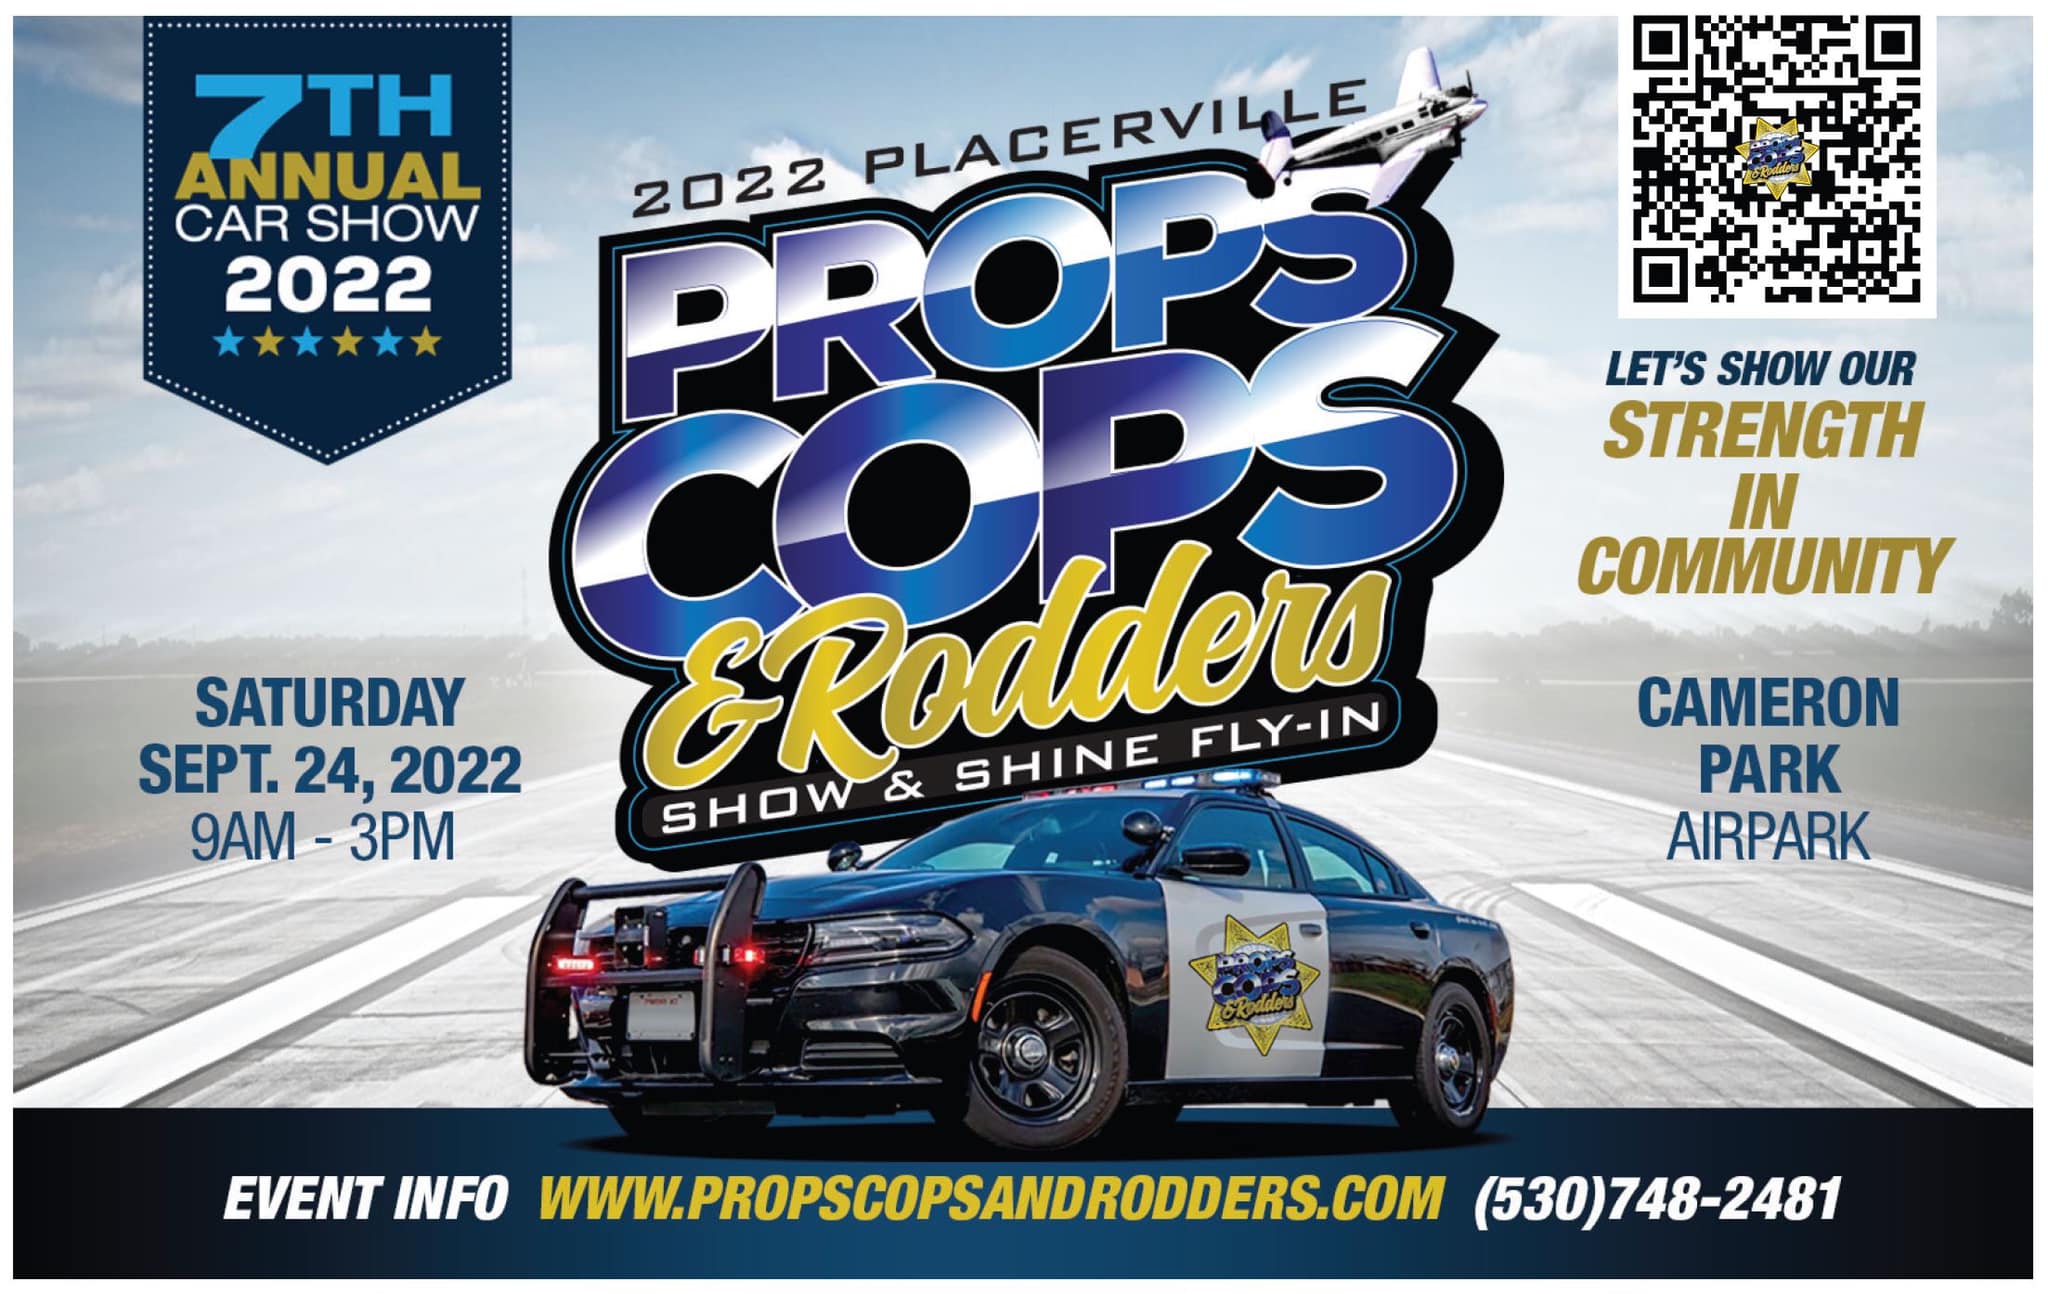 Props, Cops & Rodders Show & Shine